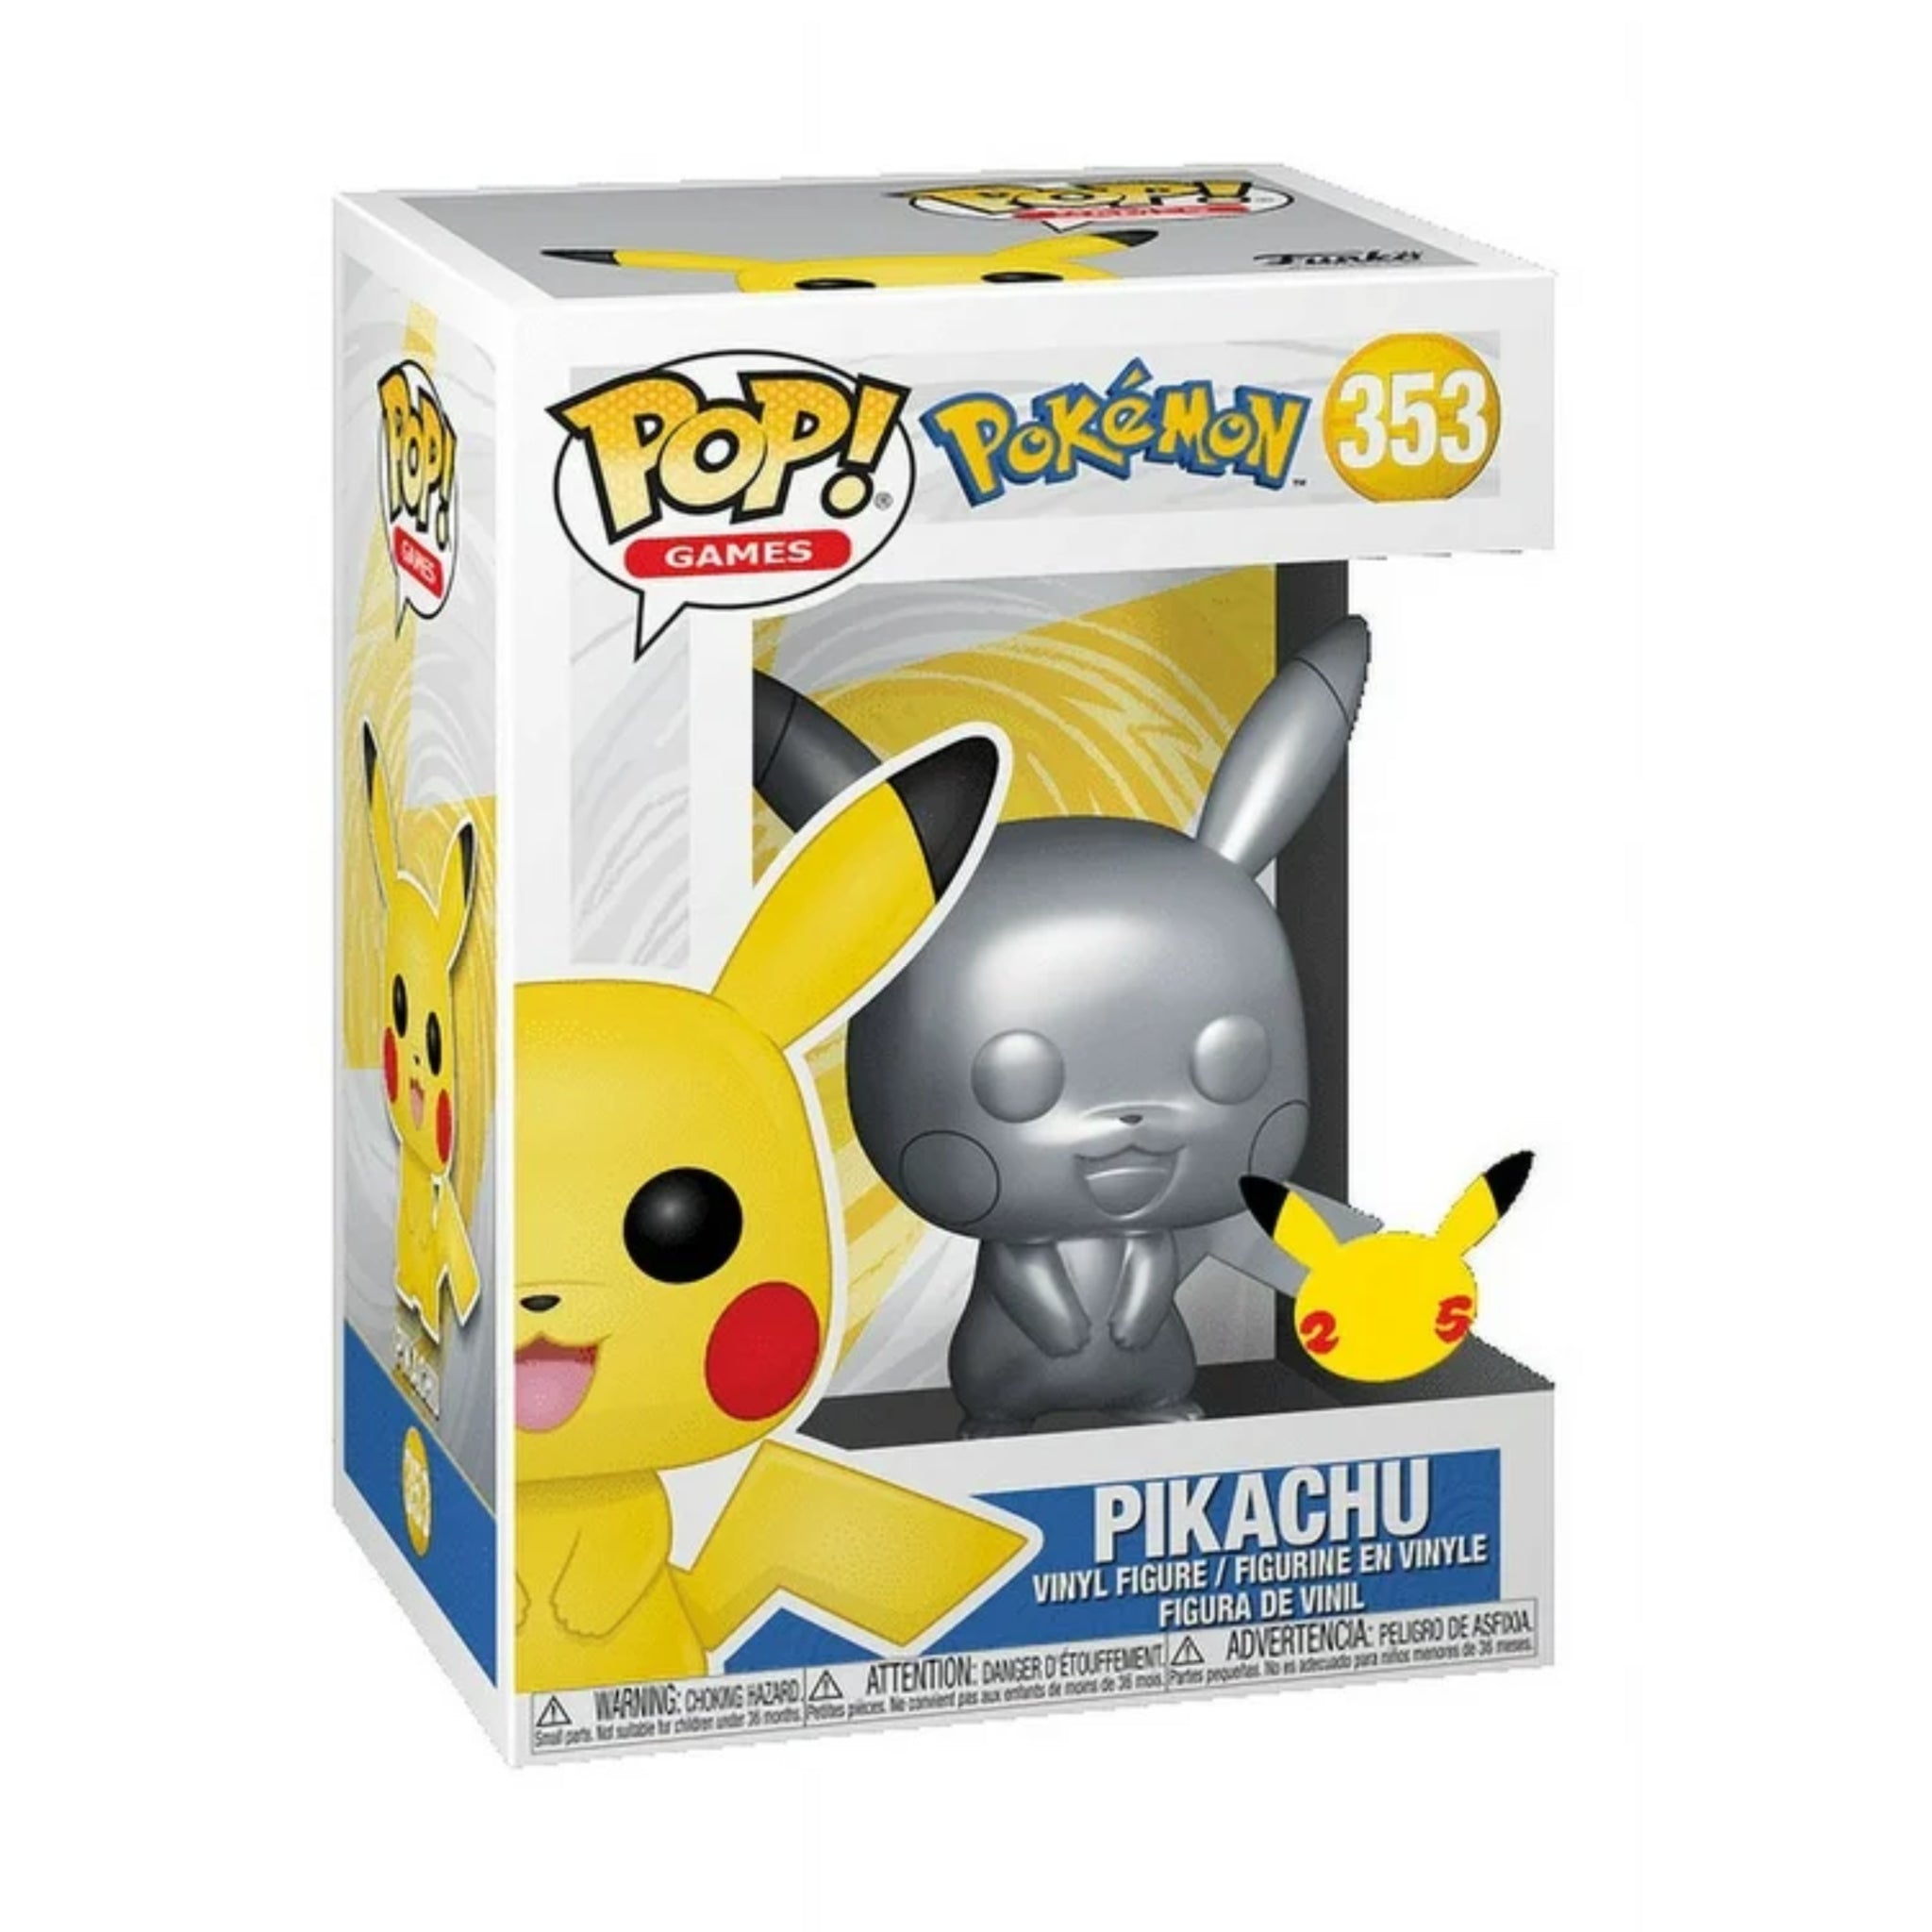 Pikachu METALLIC Funko Pop! PICKACHU 25 STICKER